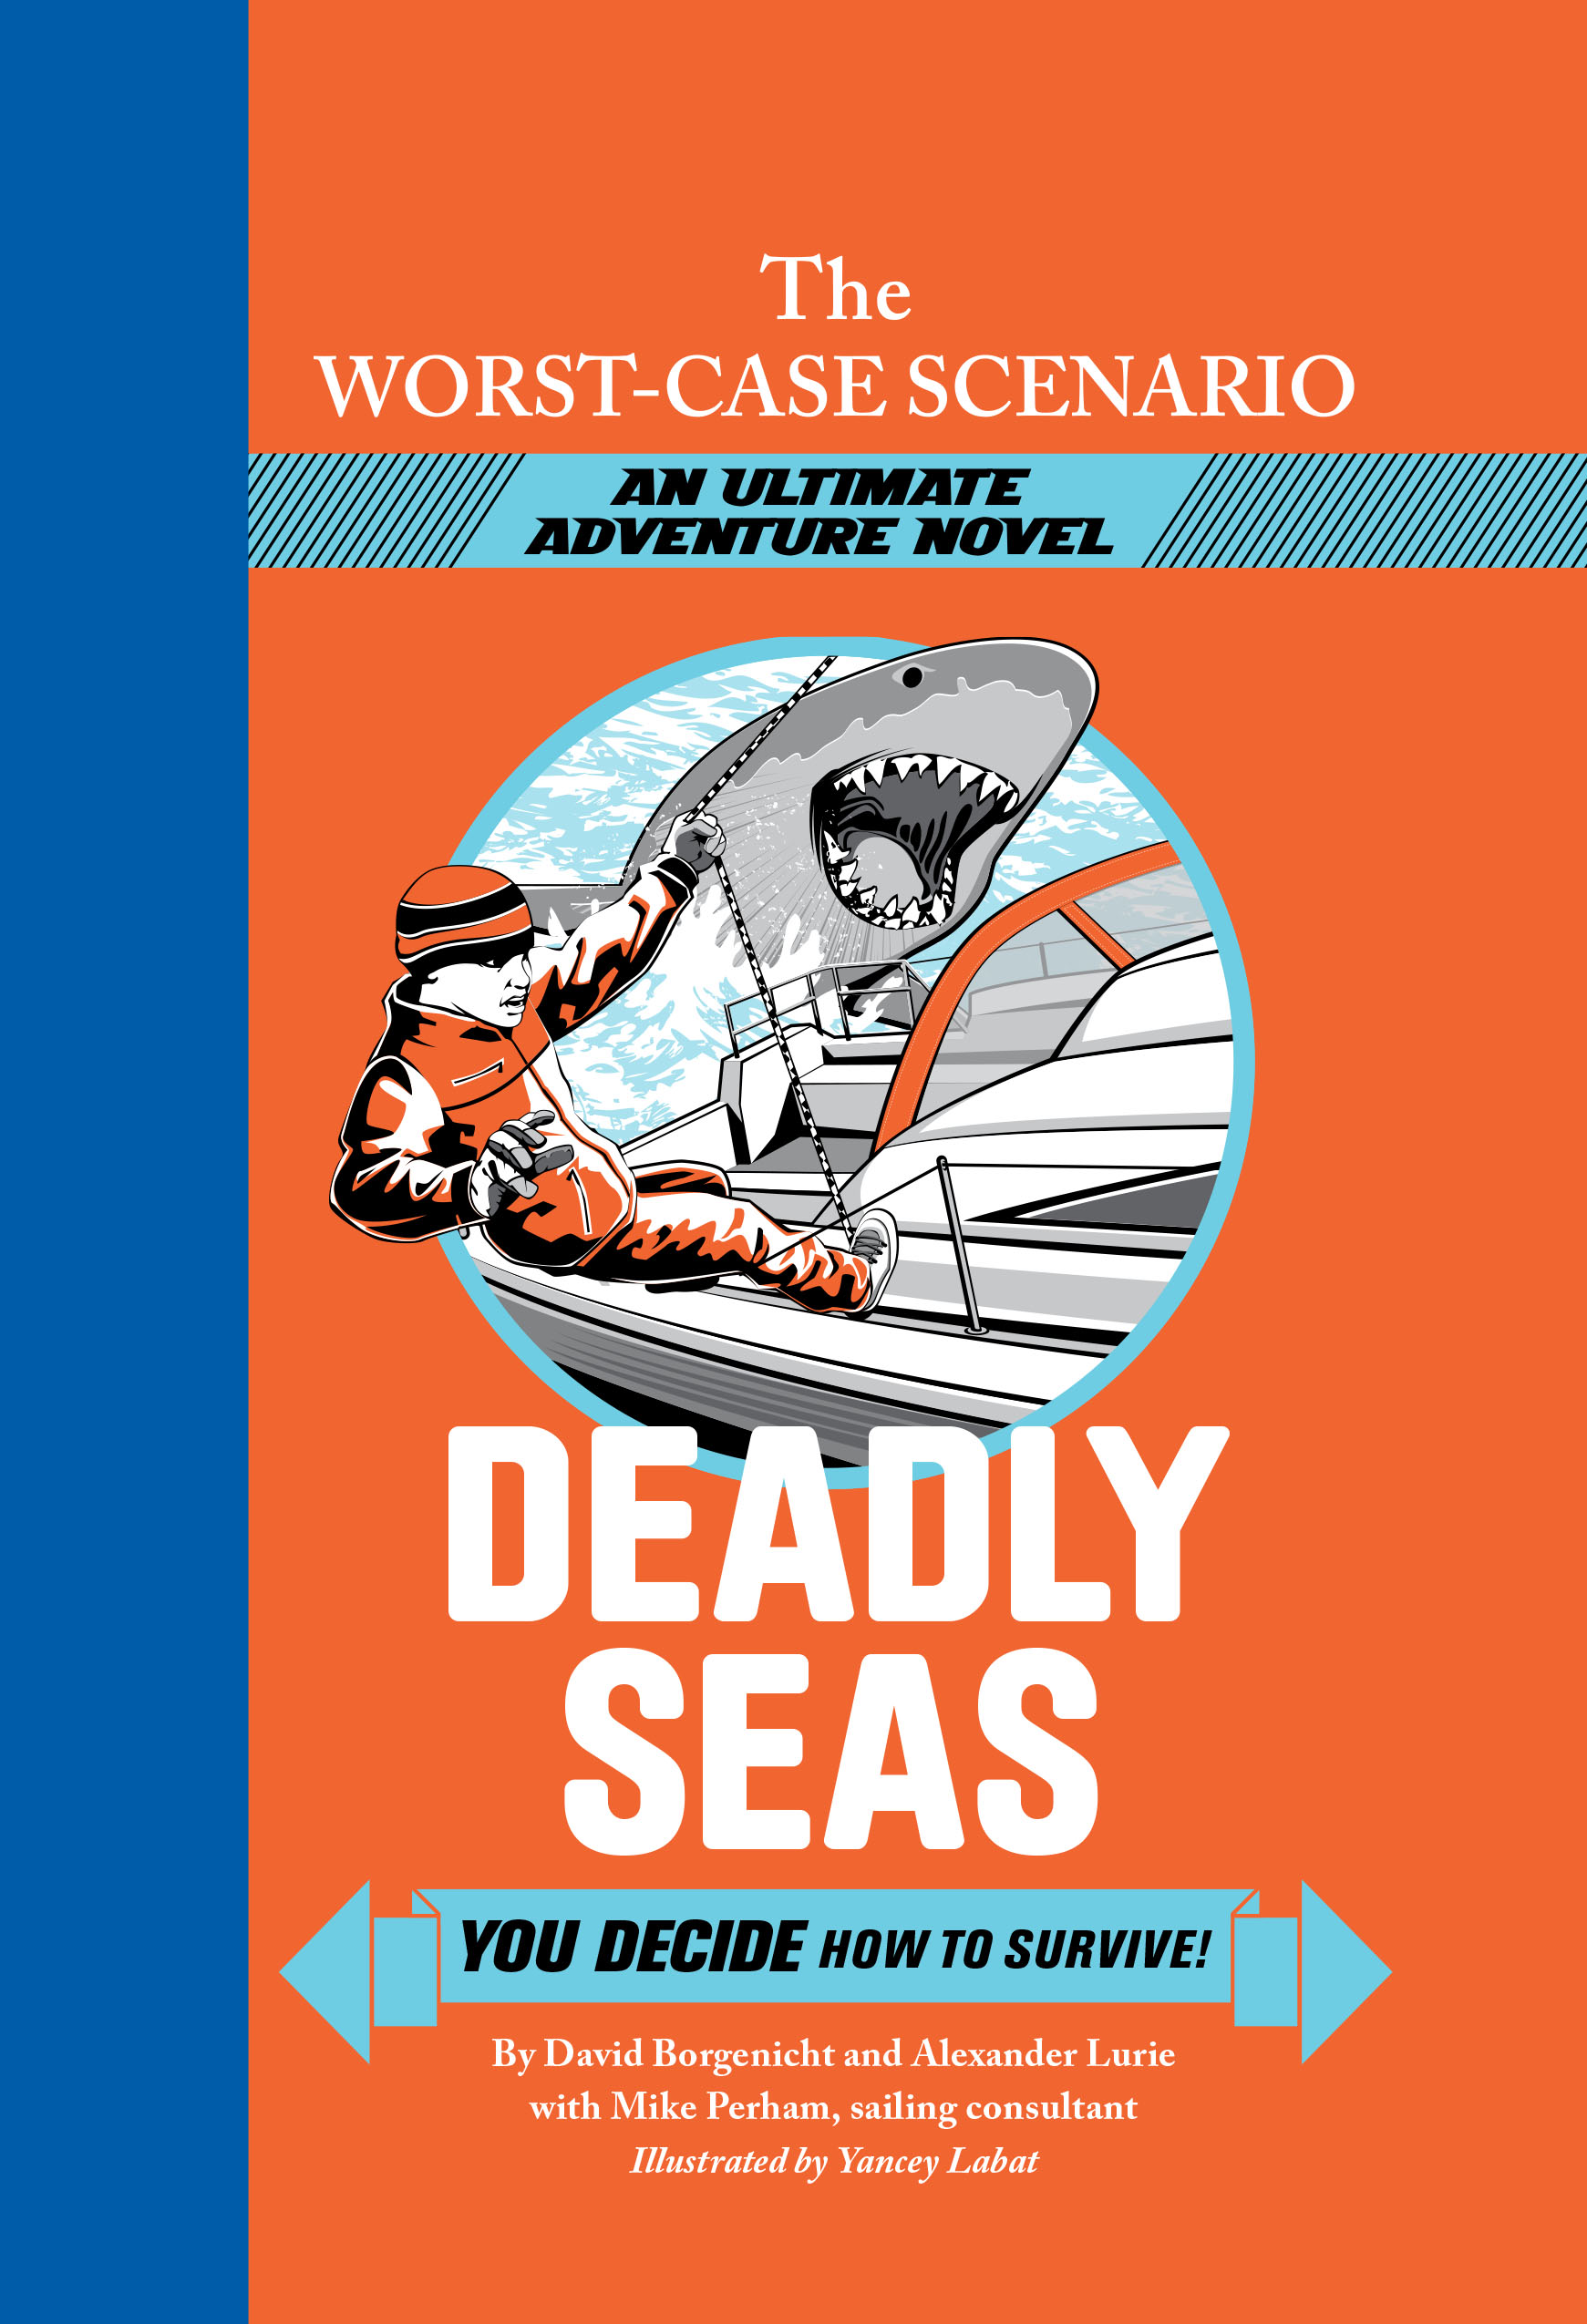 WCS Deadly Seas-1.jpg